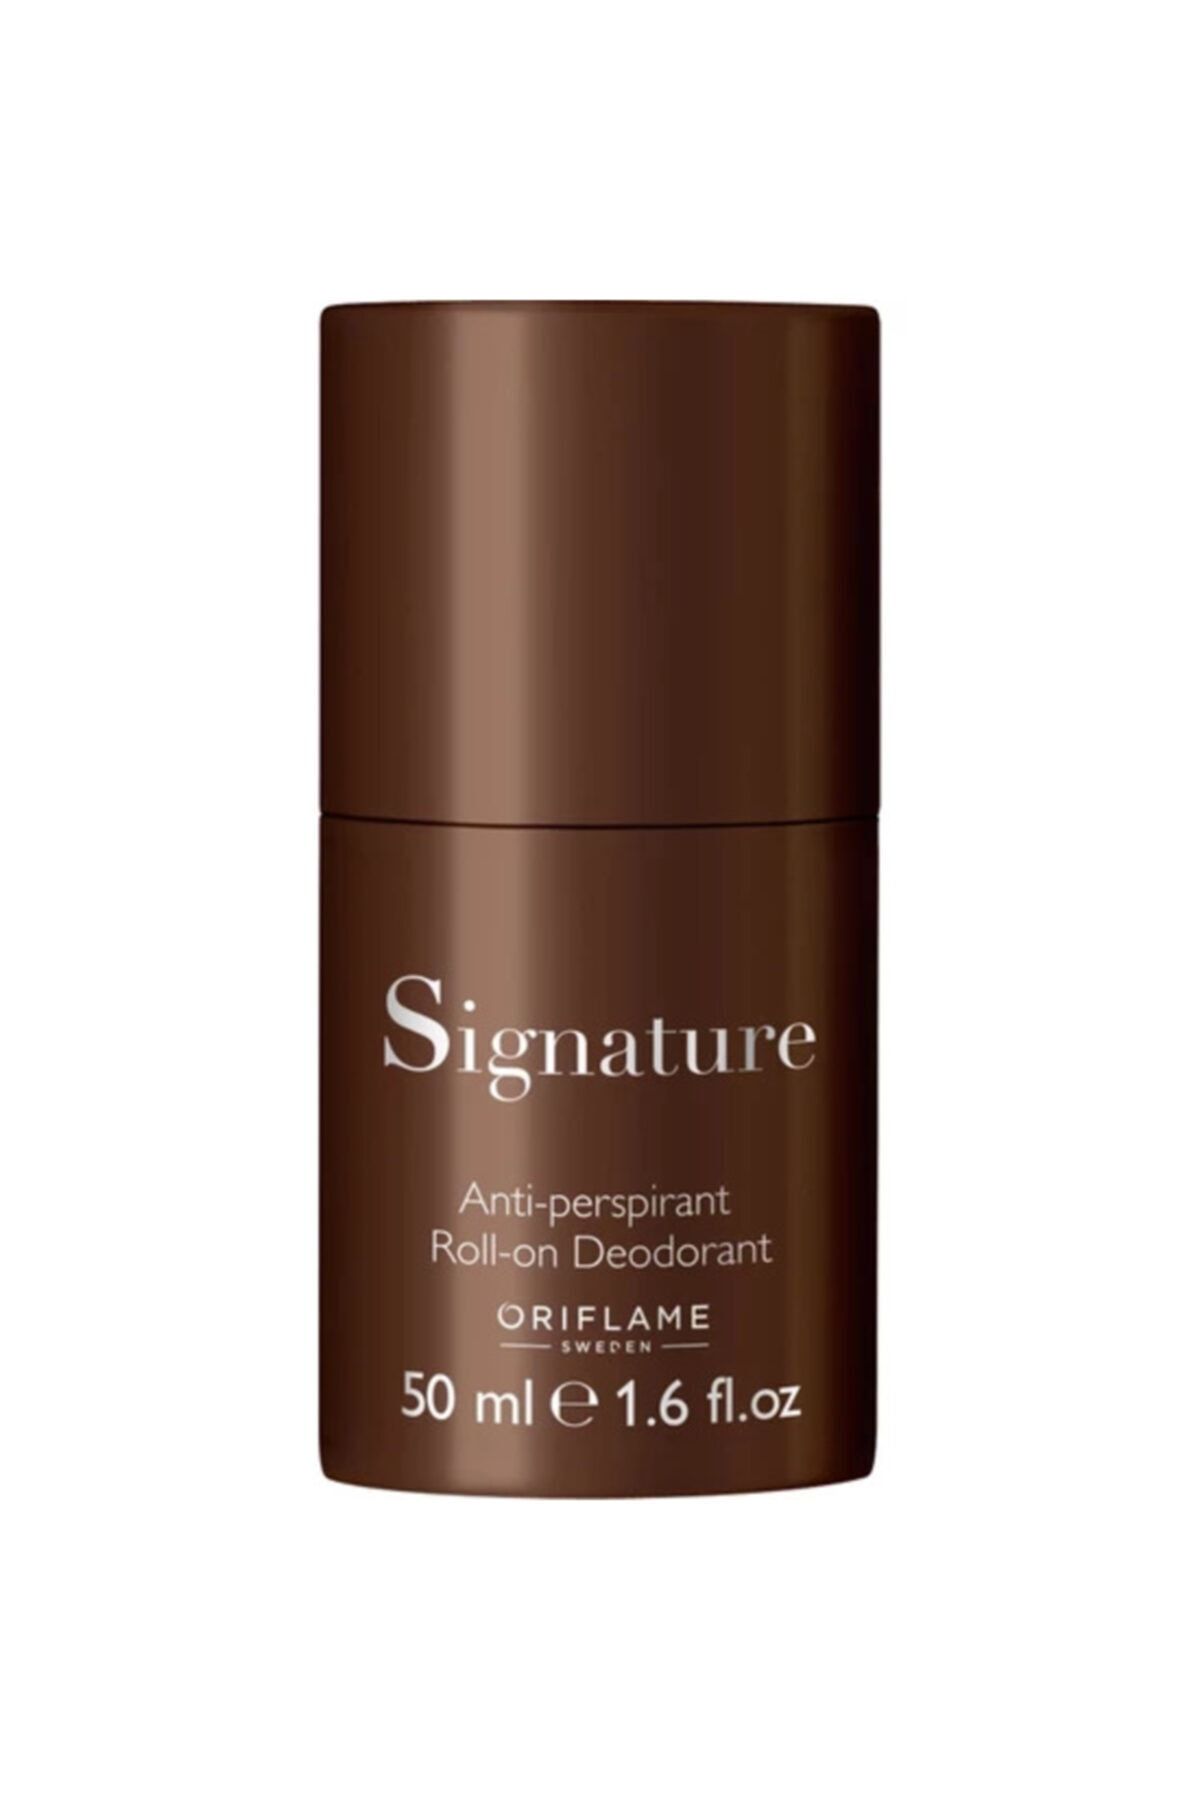 Oriflame Signature Anti-perspirant Roll-on Deodorant 31291 50 Ml